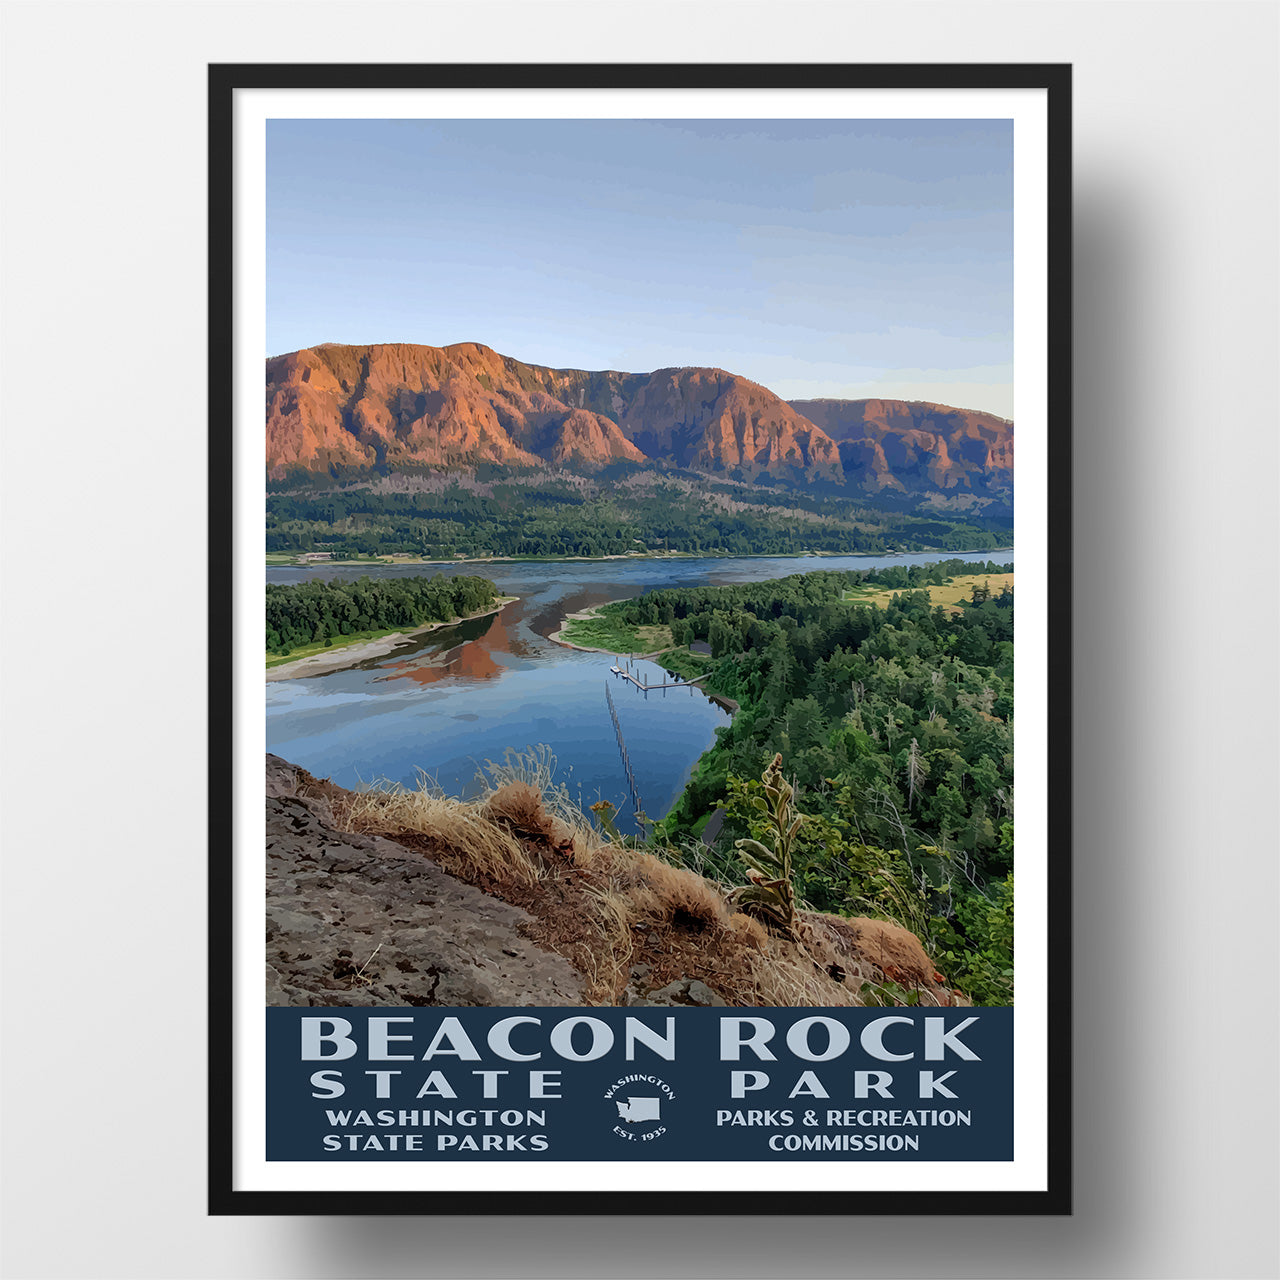 Beacon Rock State Park  Washington State Parks